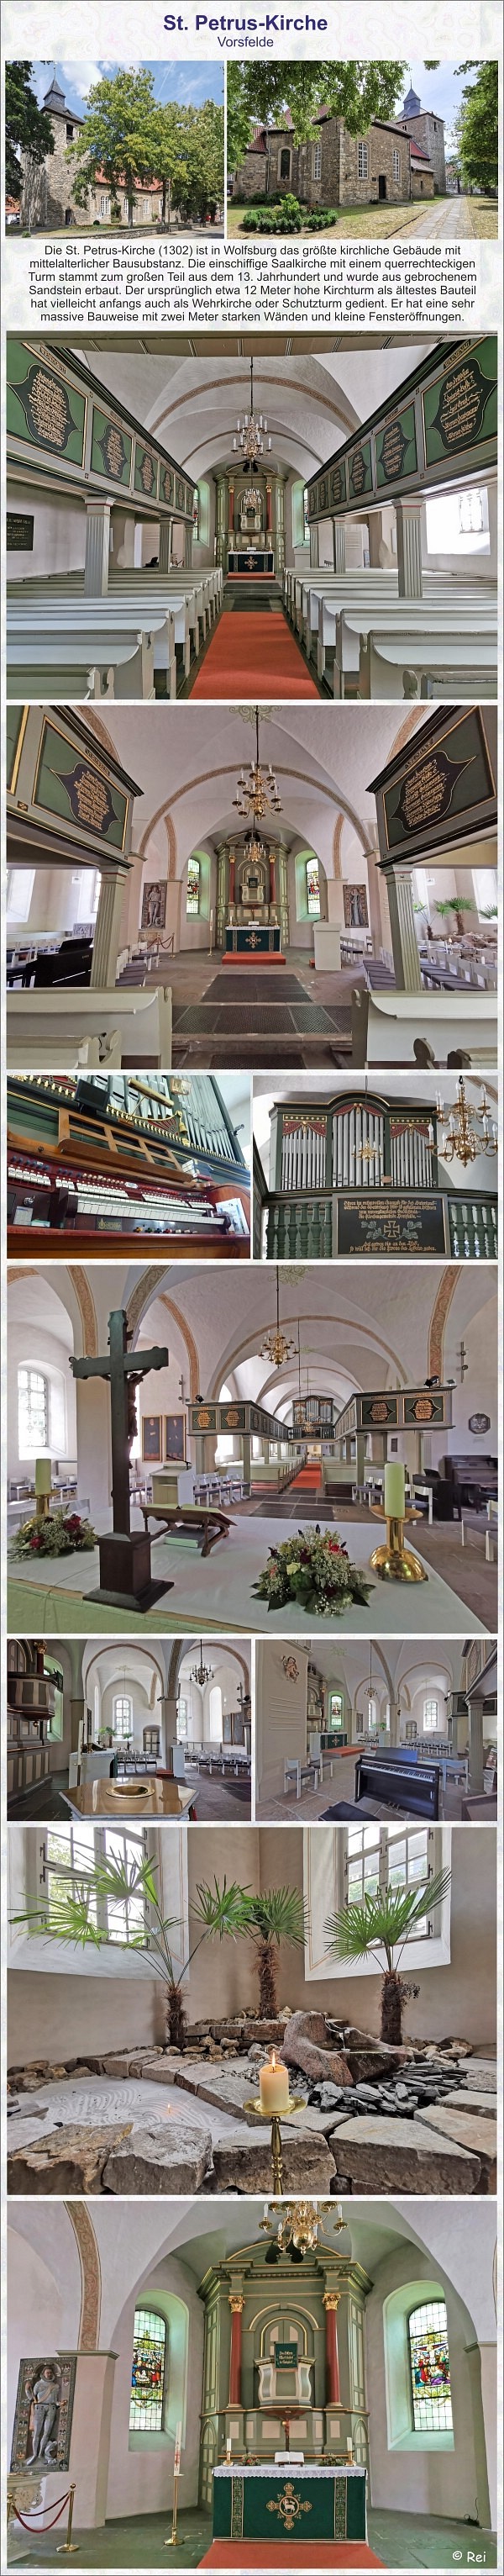 St. Petrus Kirche 2019 Vorsfelde